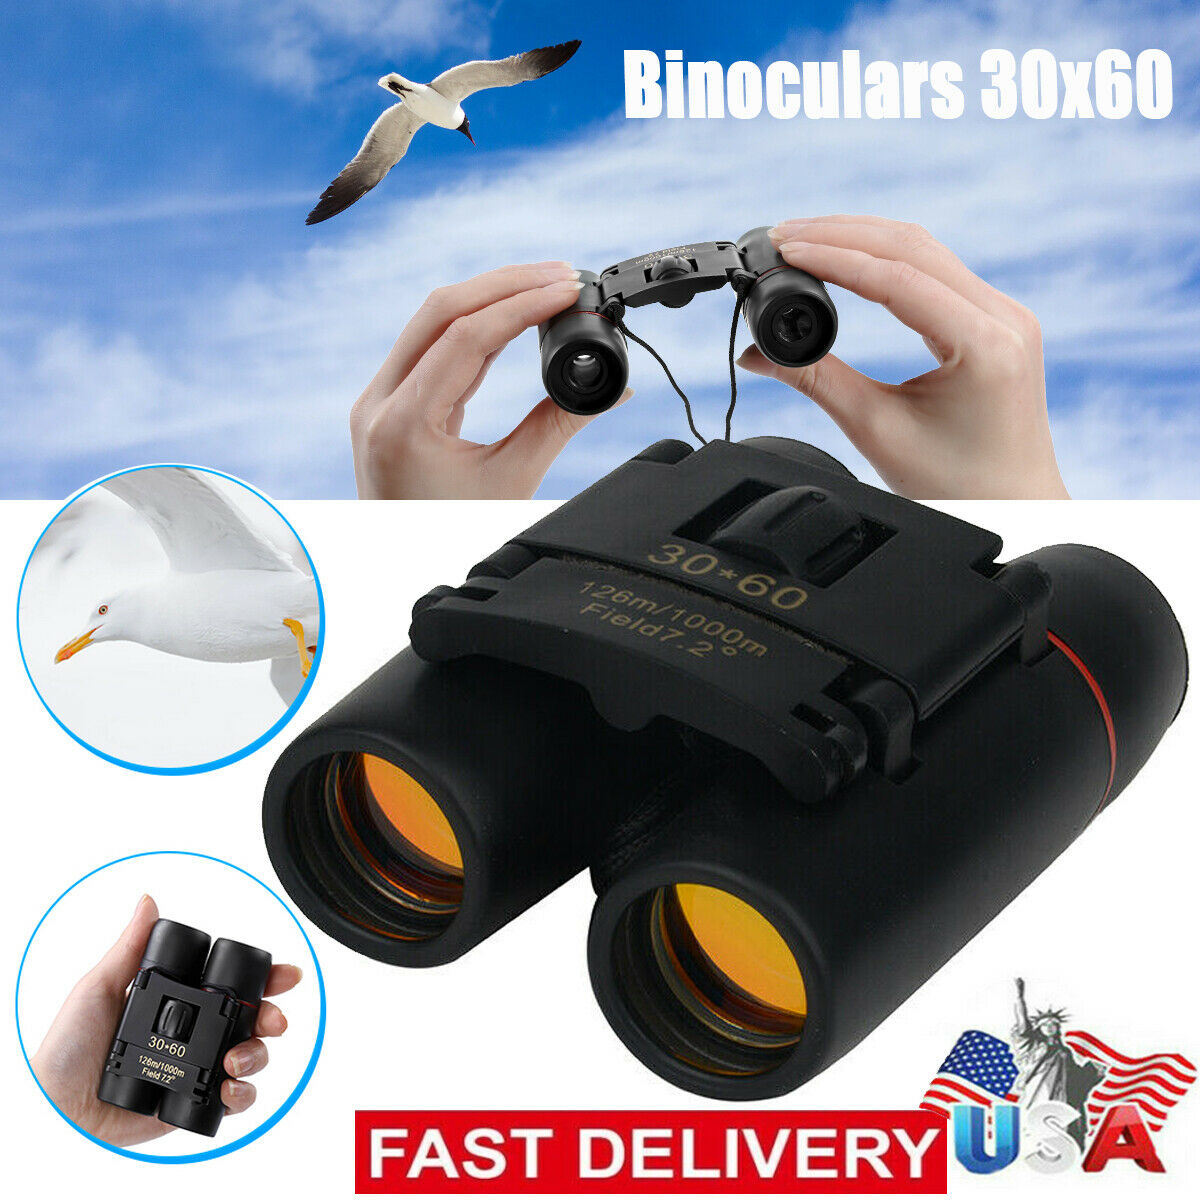 Binoculars 30x60 Zoom Travel Compact Folding Telescope Hunting Day Night Outdoor